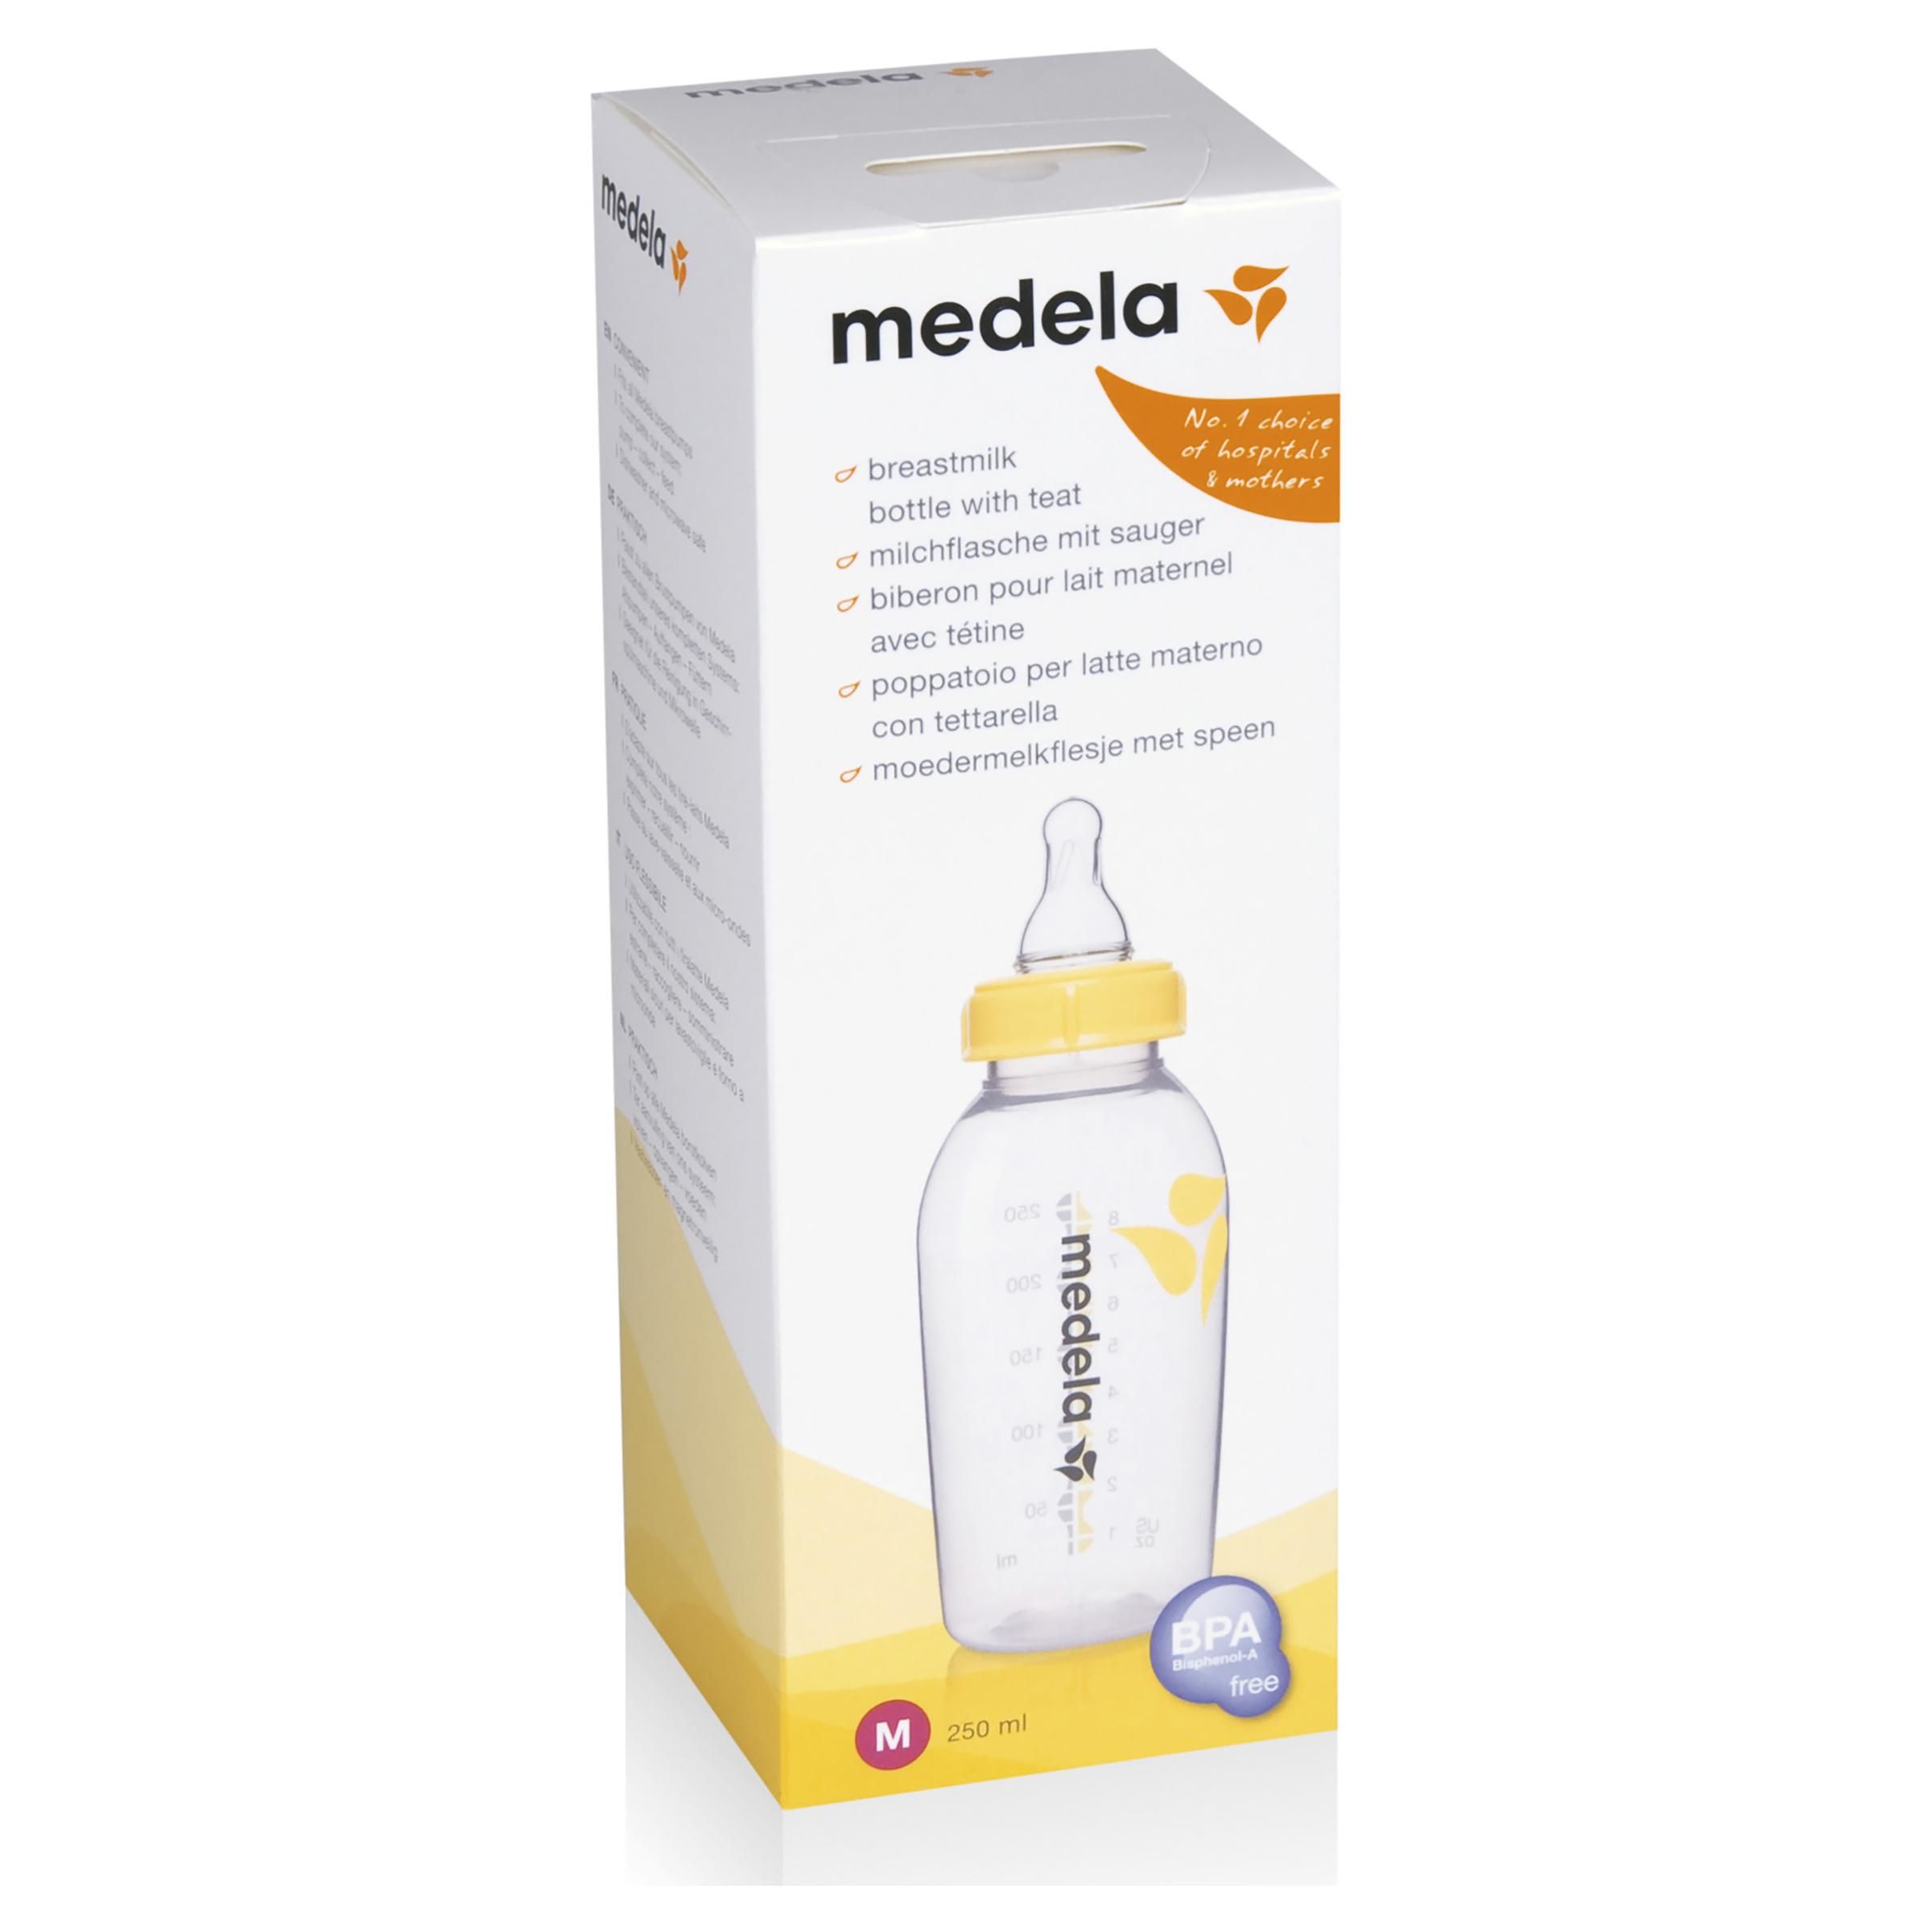 Medela Breast milk bottle with teat 150ml - S